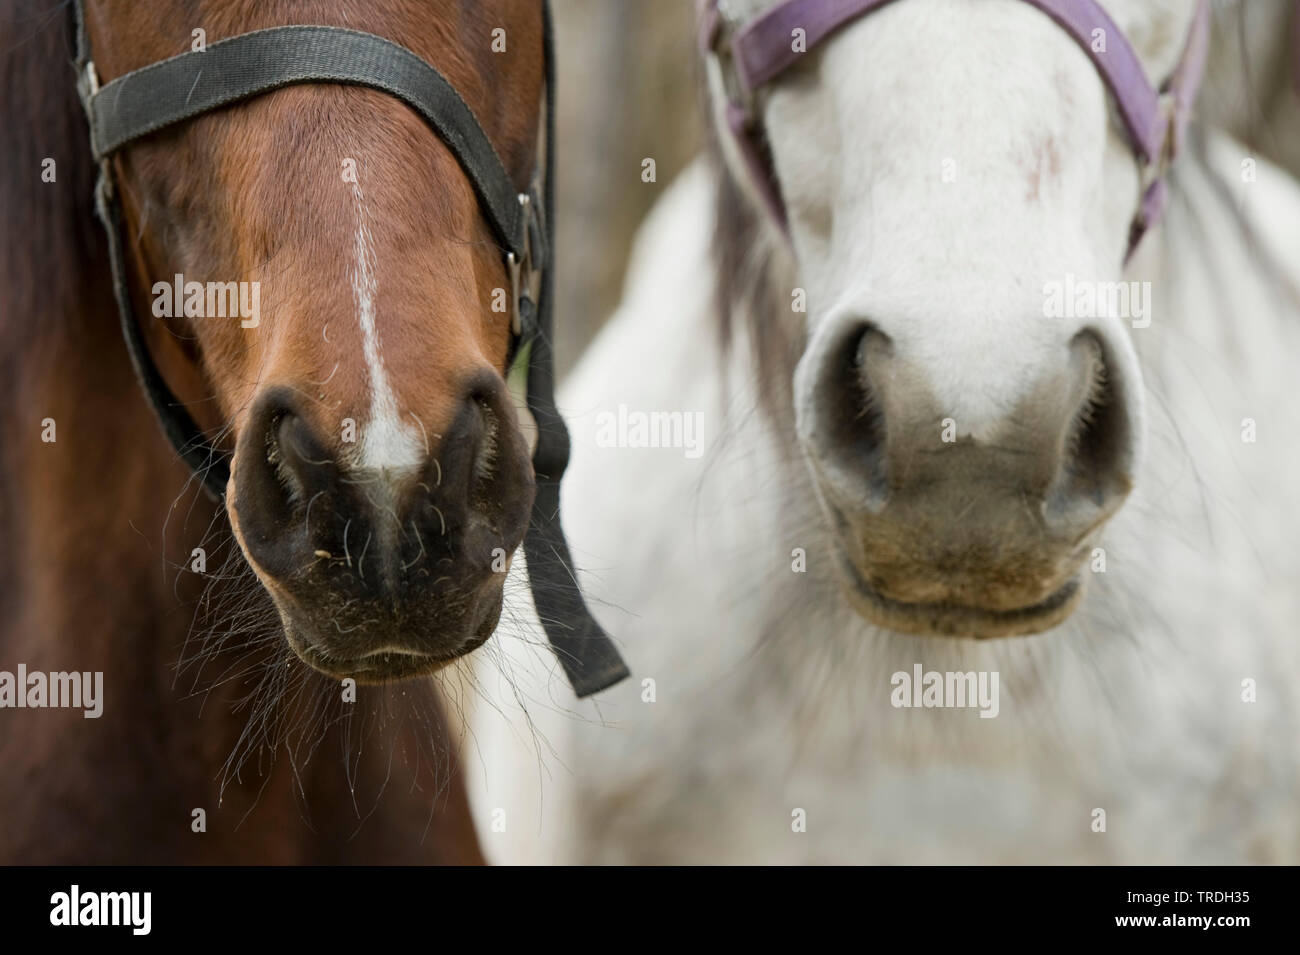 domestic horse (Equus przewalskii f. caballus), nostrils of two horses Stock Photo